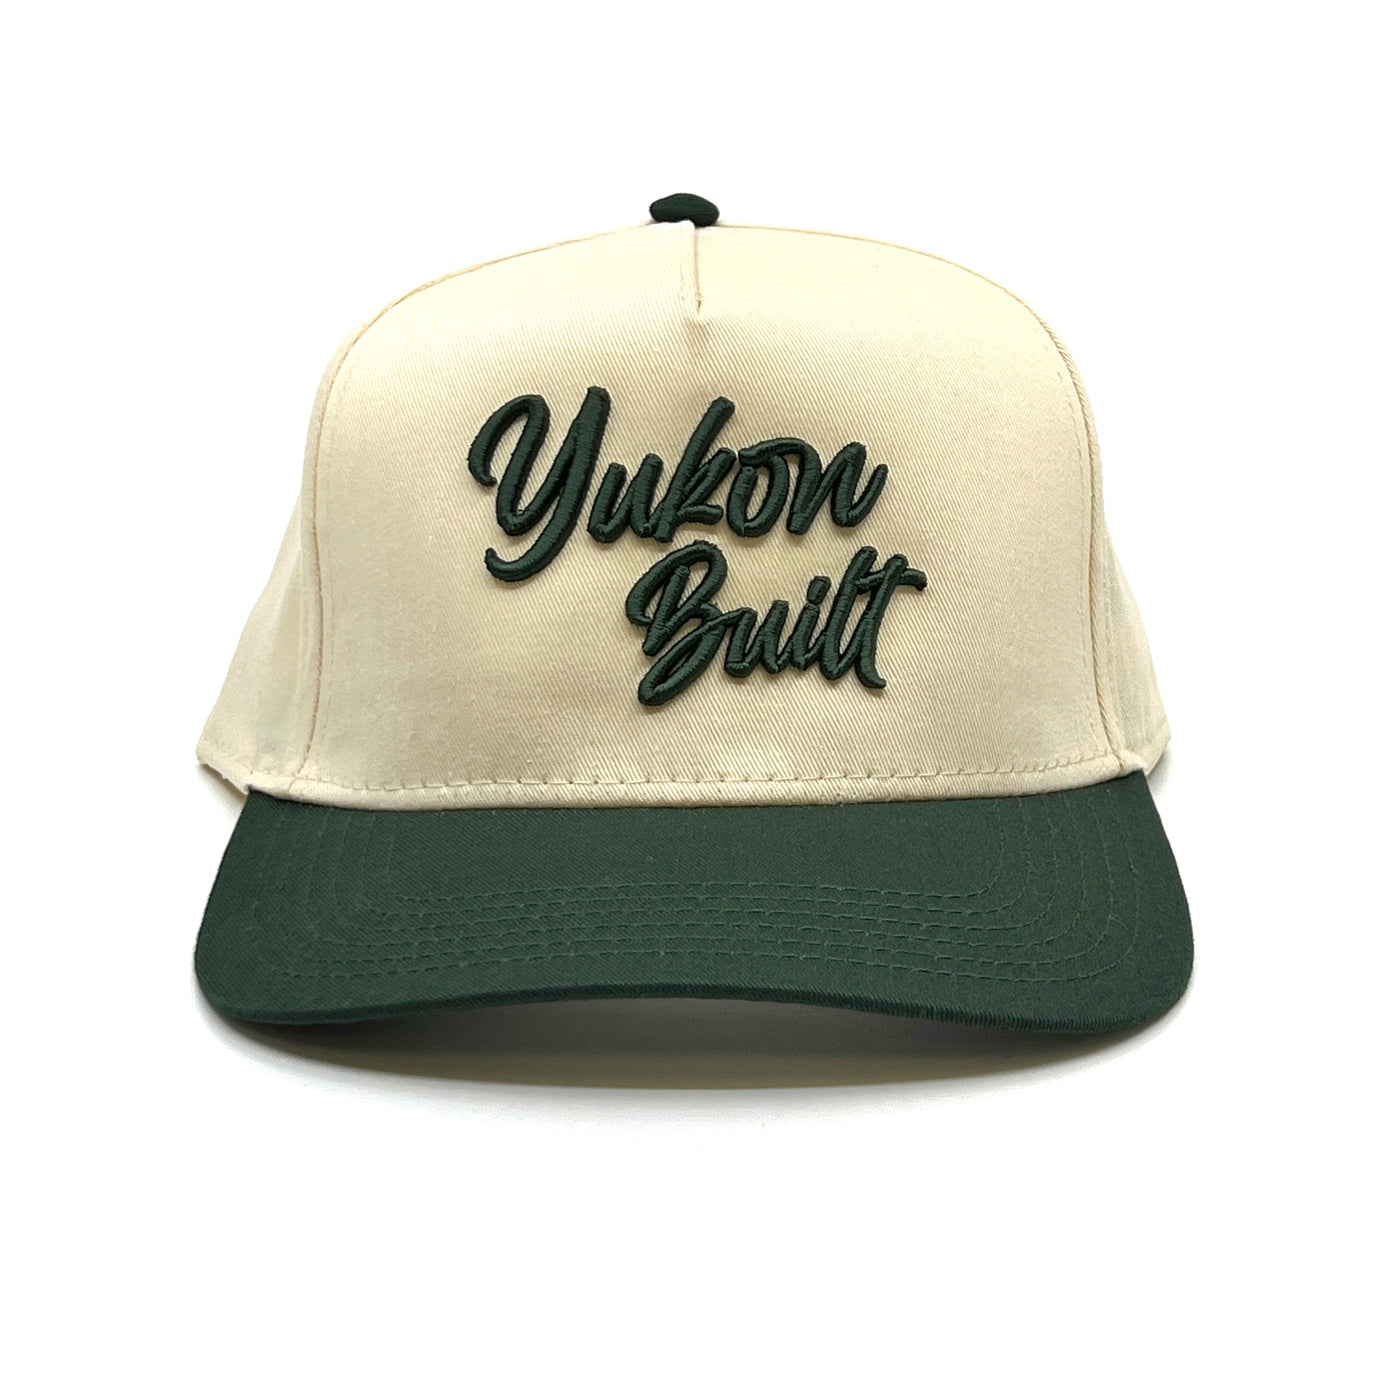 Vintage Two-Tone Hat